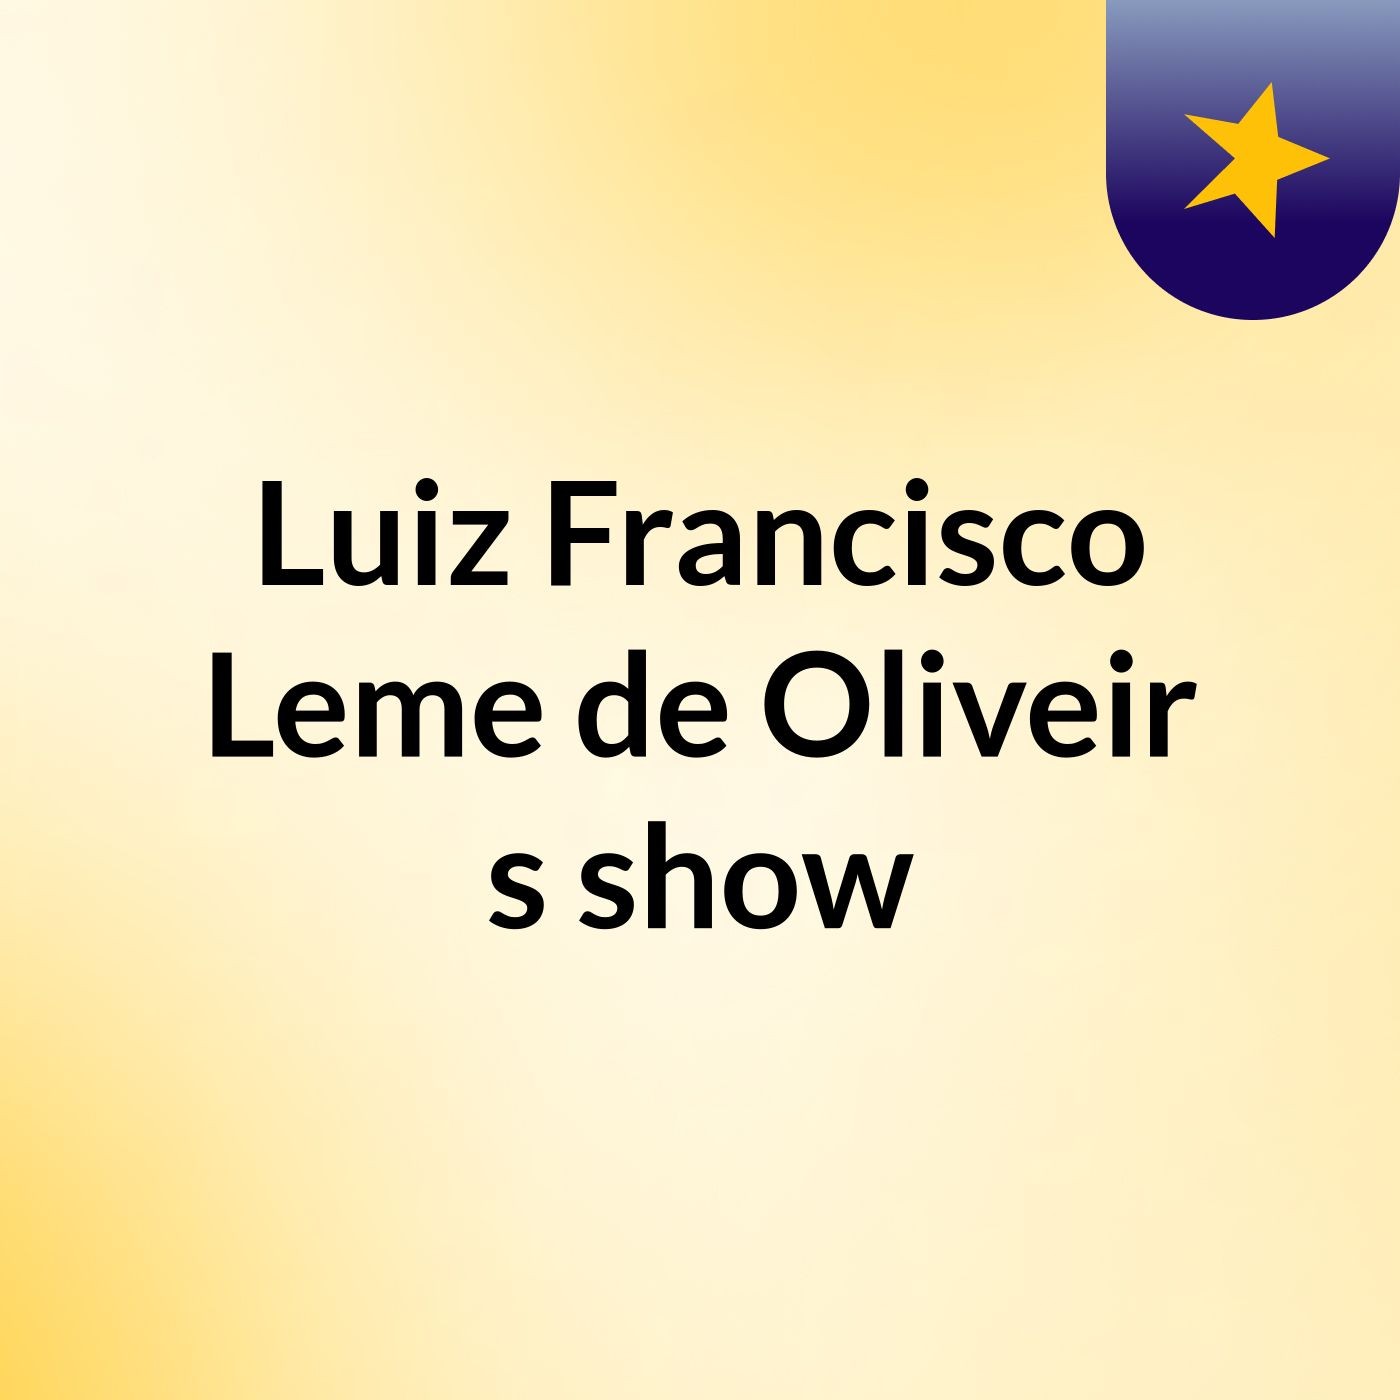 Luiz Francisco Leme de Oliveir's show